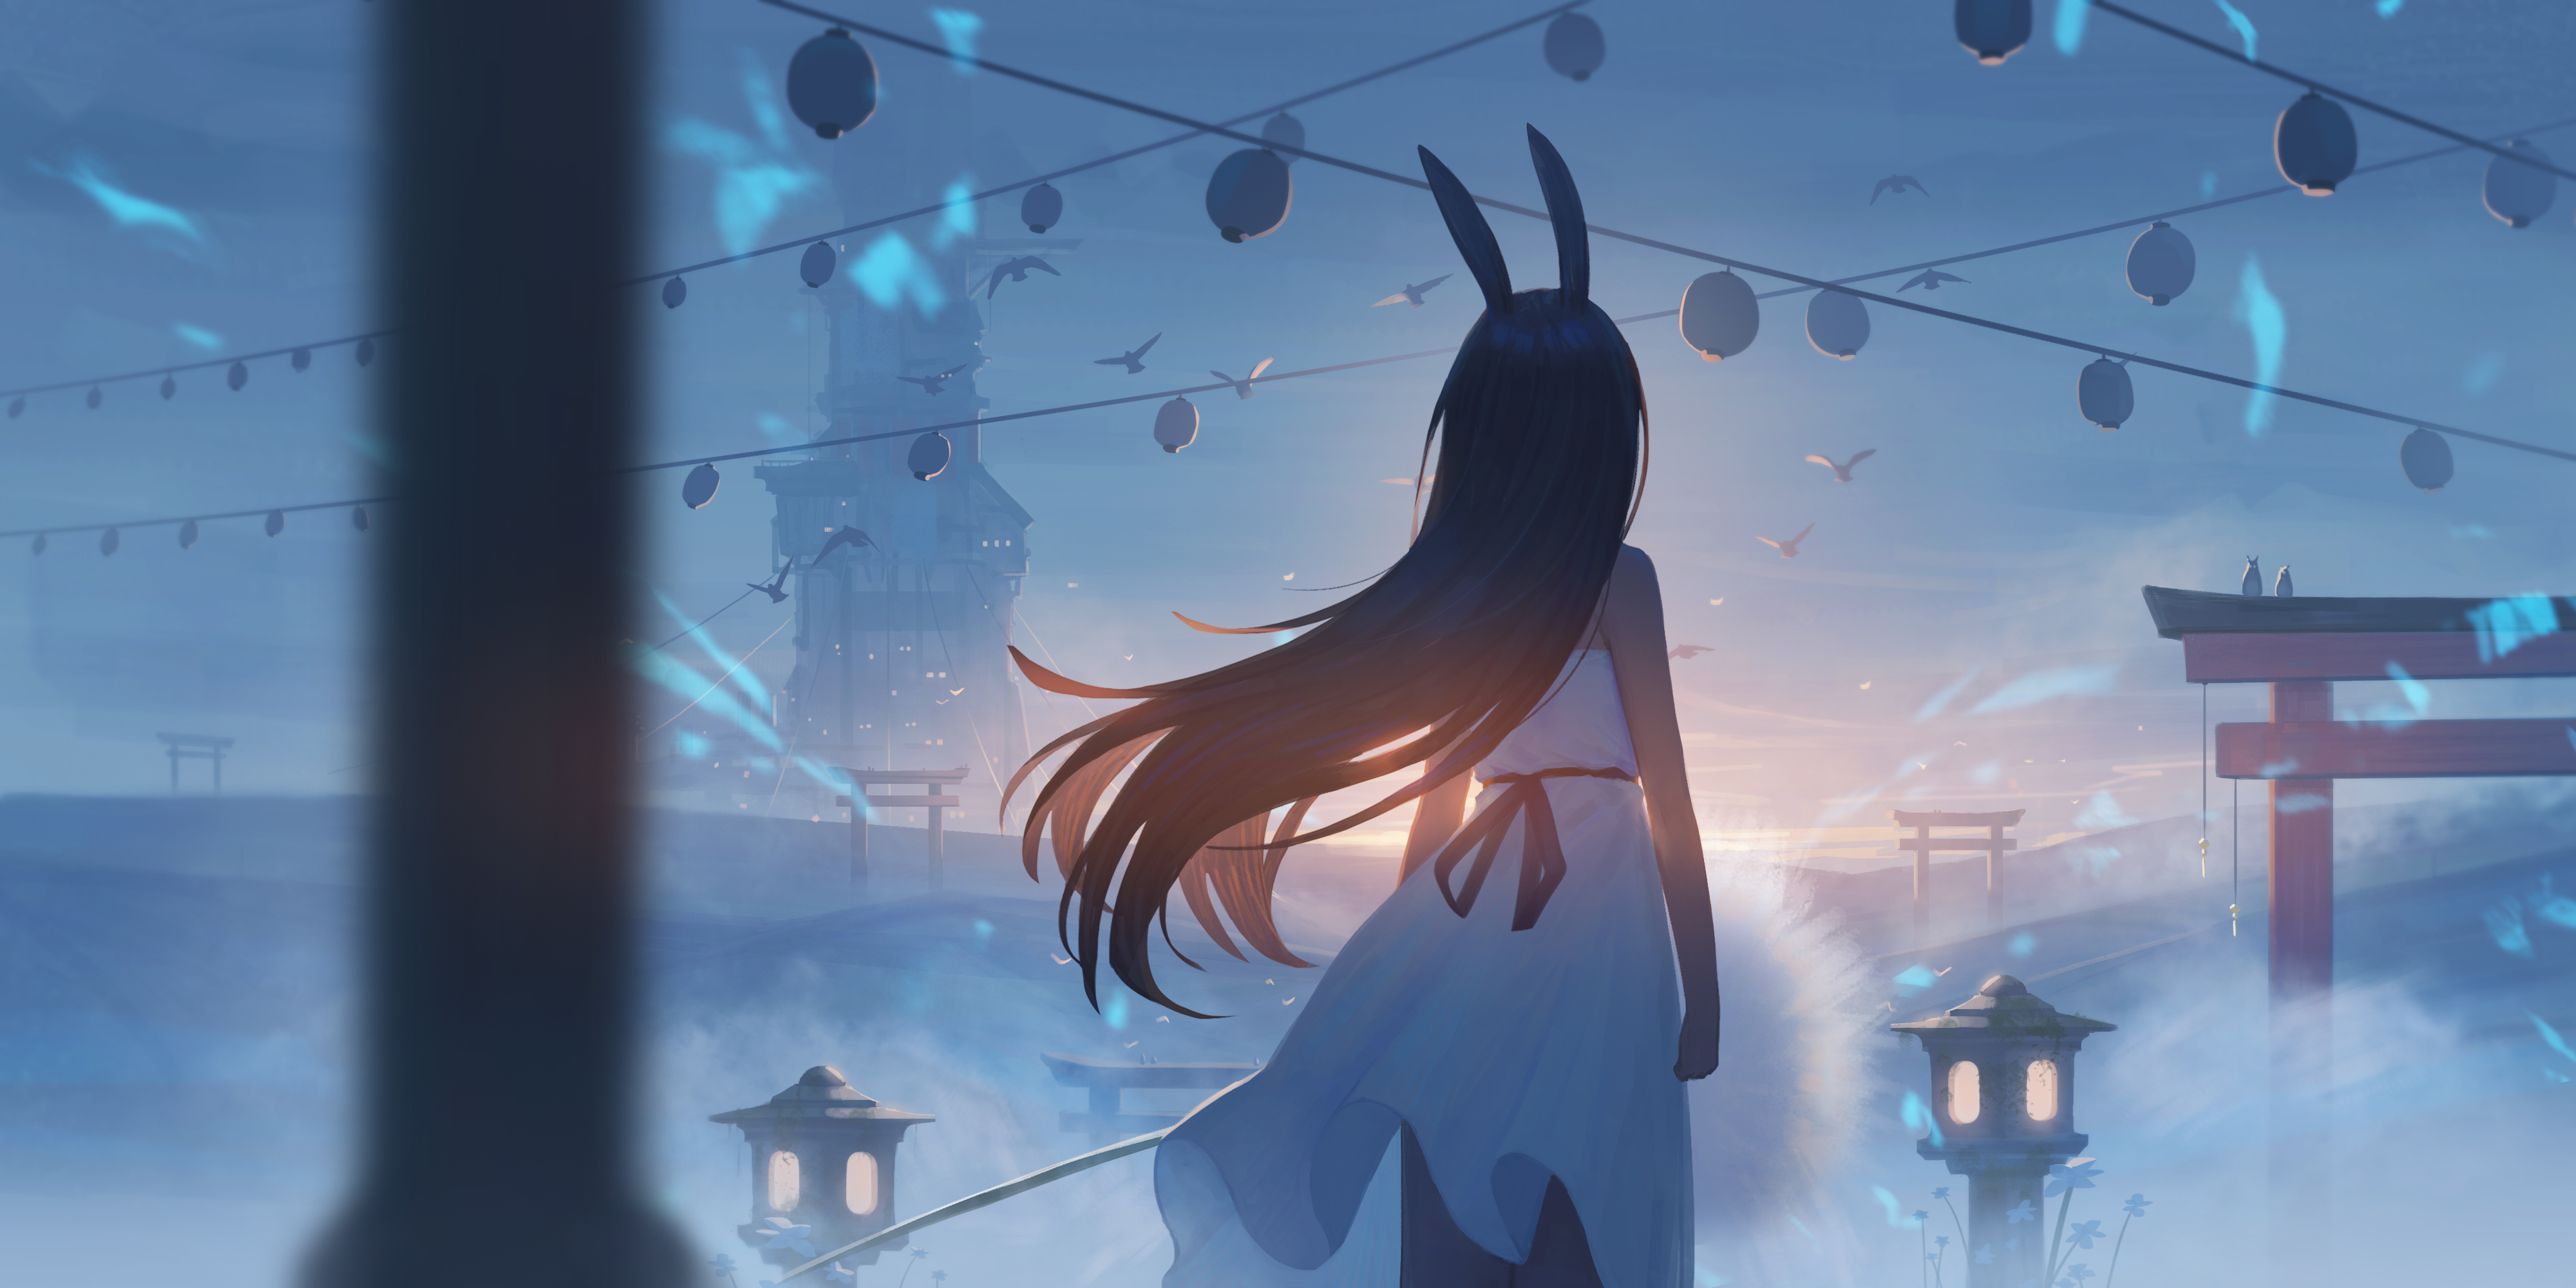 Anime Anime Girls Long Hair Birds Clouds Sunset Sky Flowers Night Lanterns Asian Architecture Brunet 4000x2000